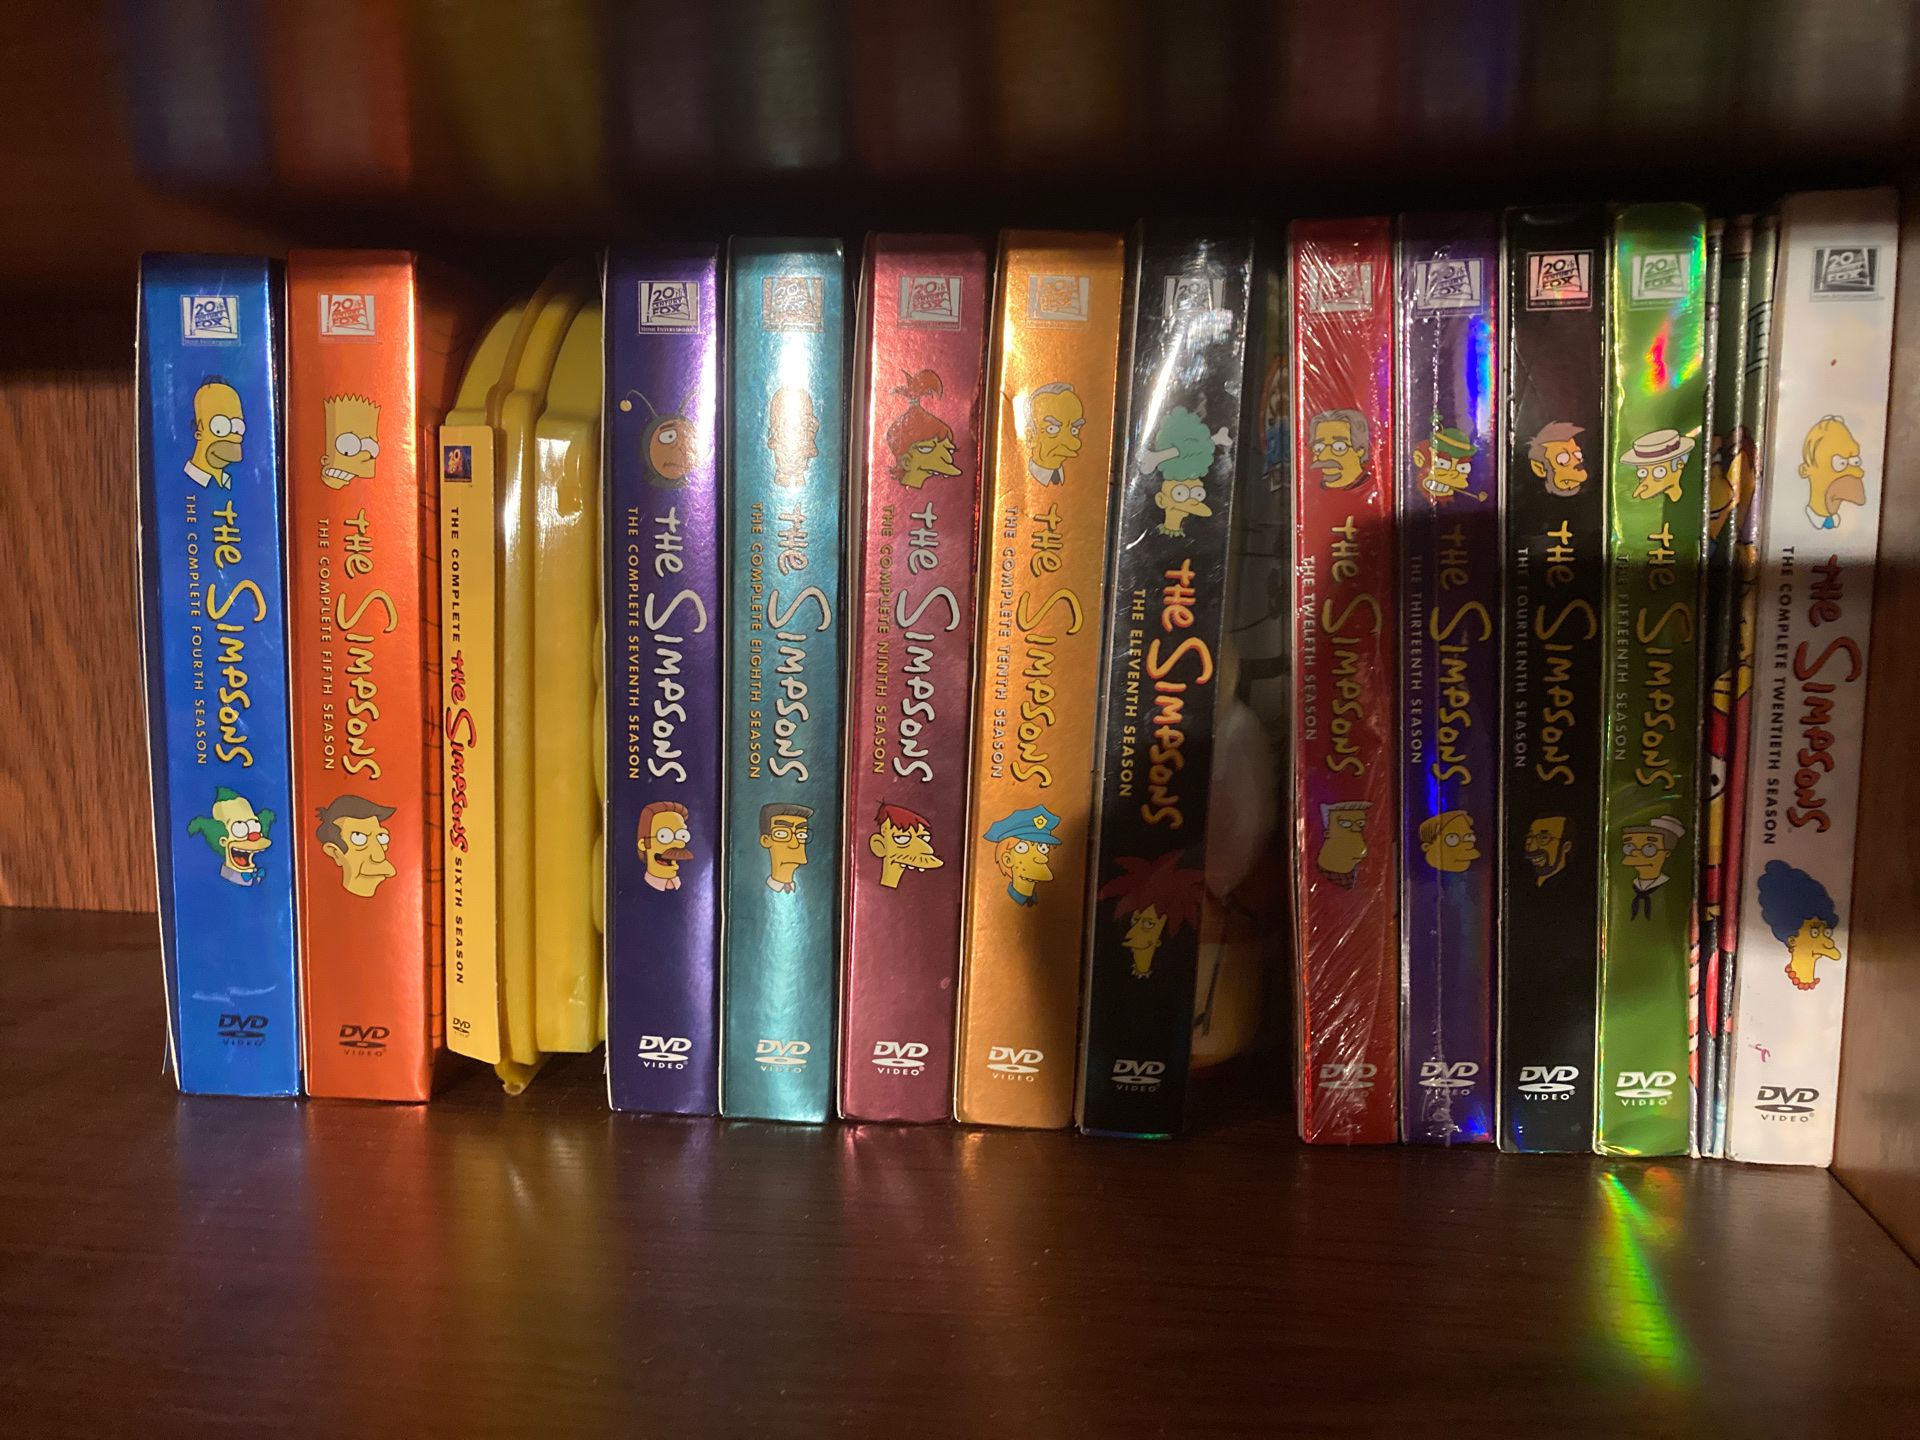 Simpsons DVD sets